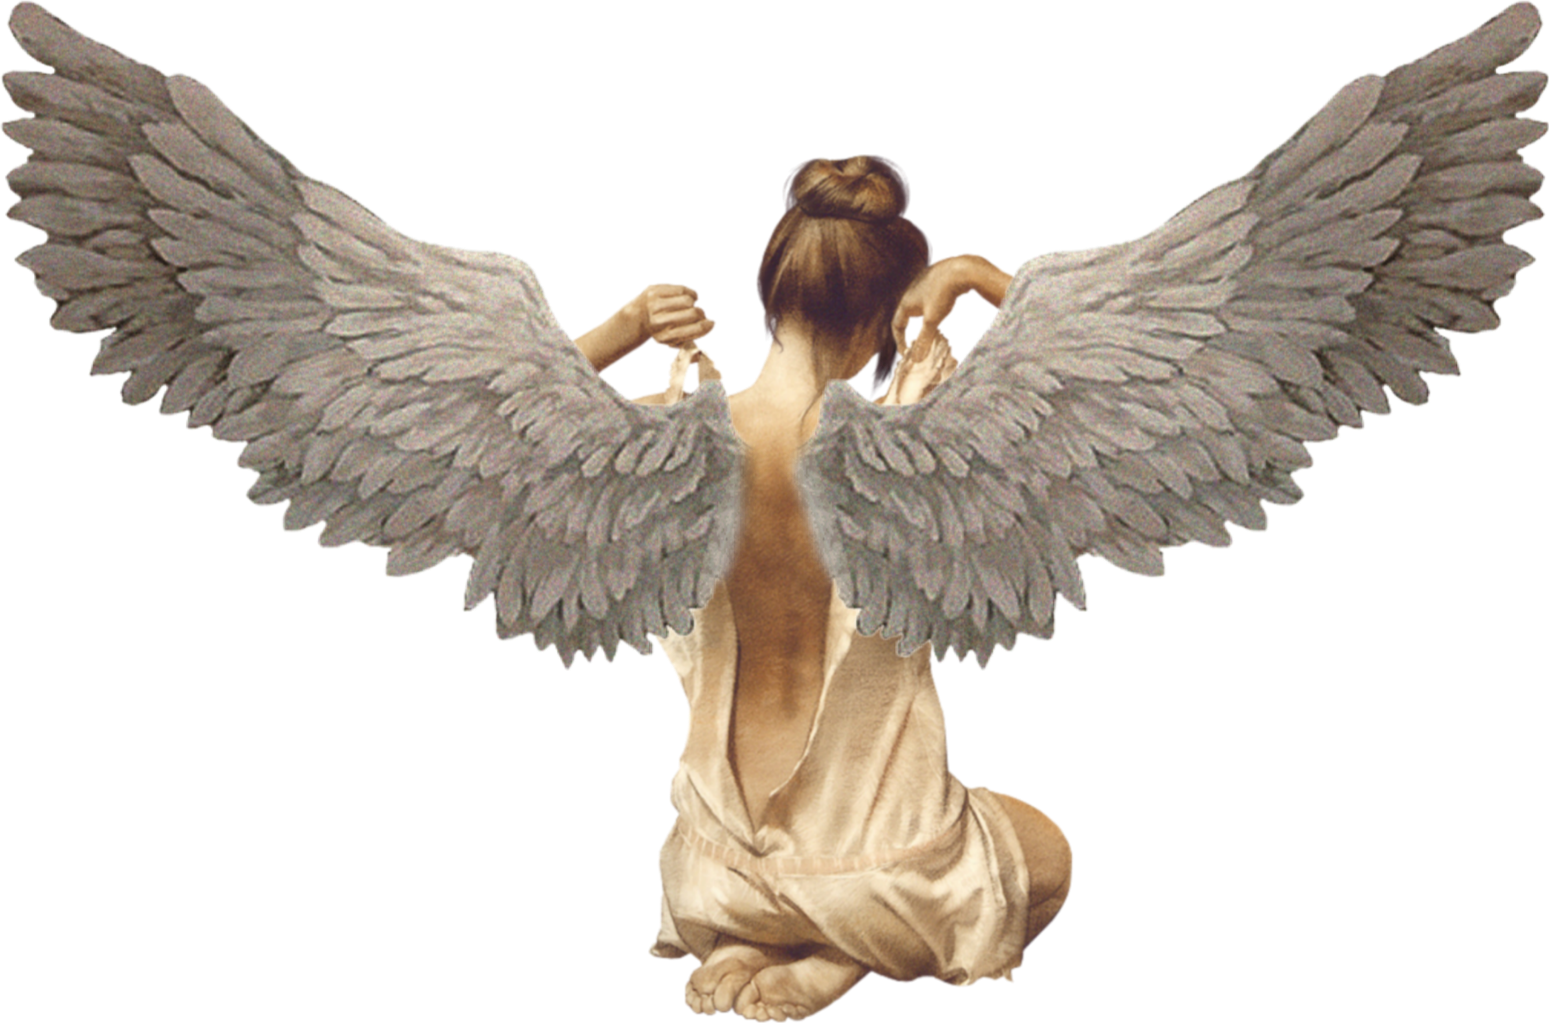 Freetoedit Girl Angel Wings Sticker By Elisabethdiangelo